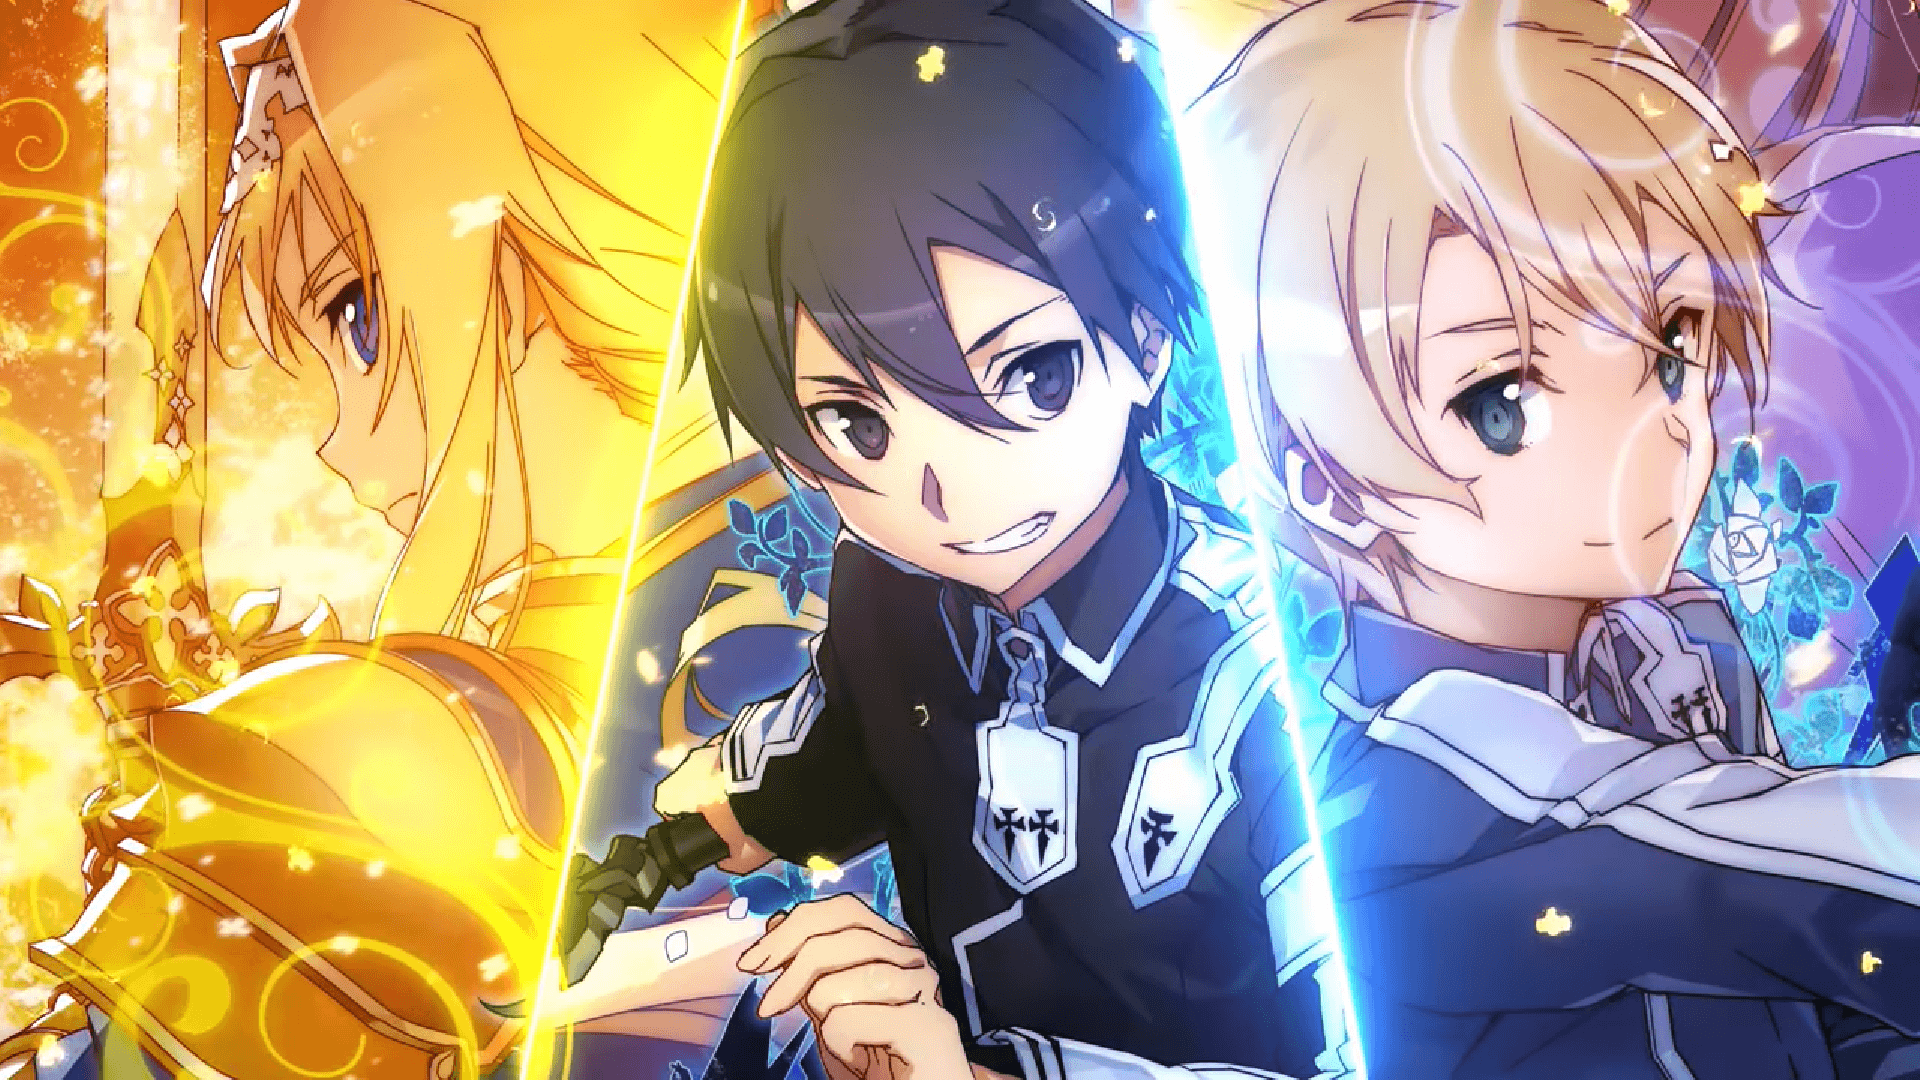 SAO: Alicization' Anime to Adapt Entire Light Novel Arc